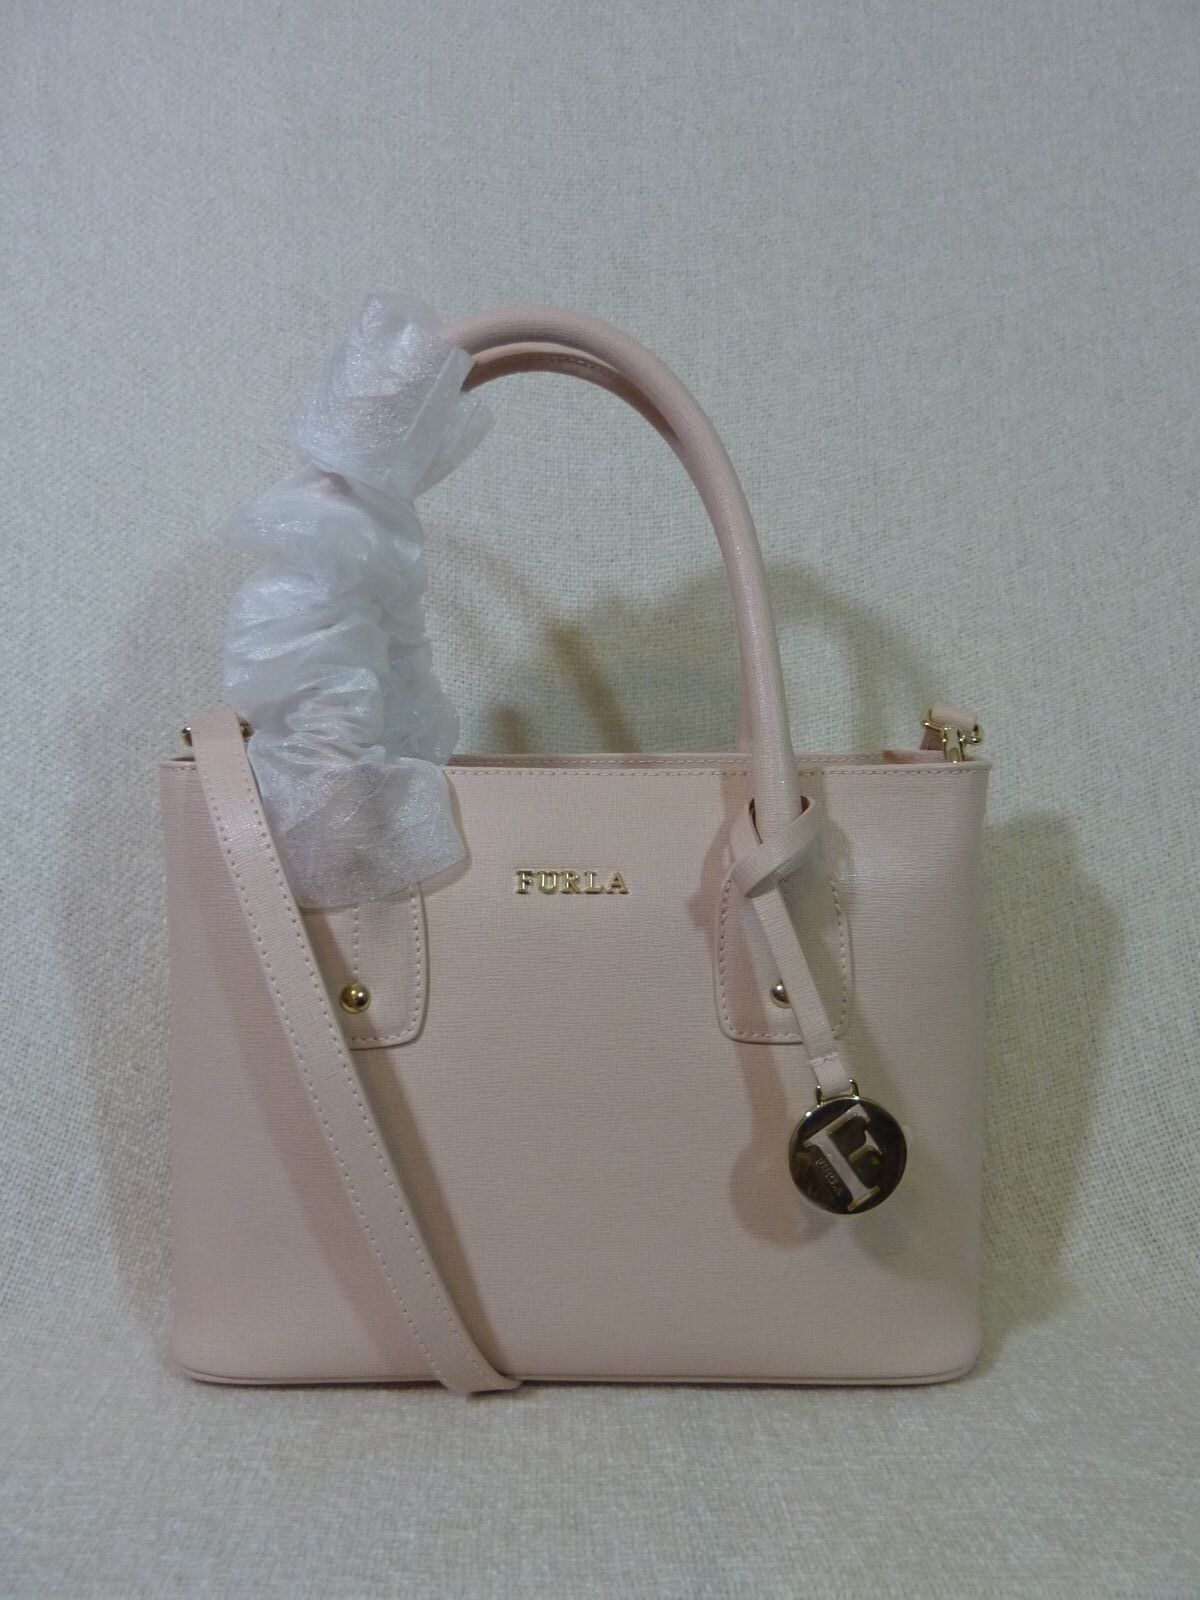 Primary image for FURLA Magnolia Pink Saffiano Lthr Small Josi Tote/Xbody Bag $328 - Made in Italy